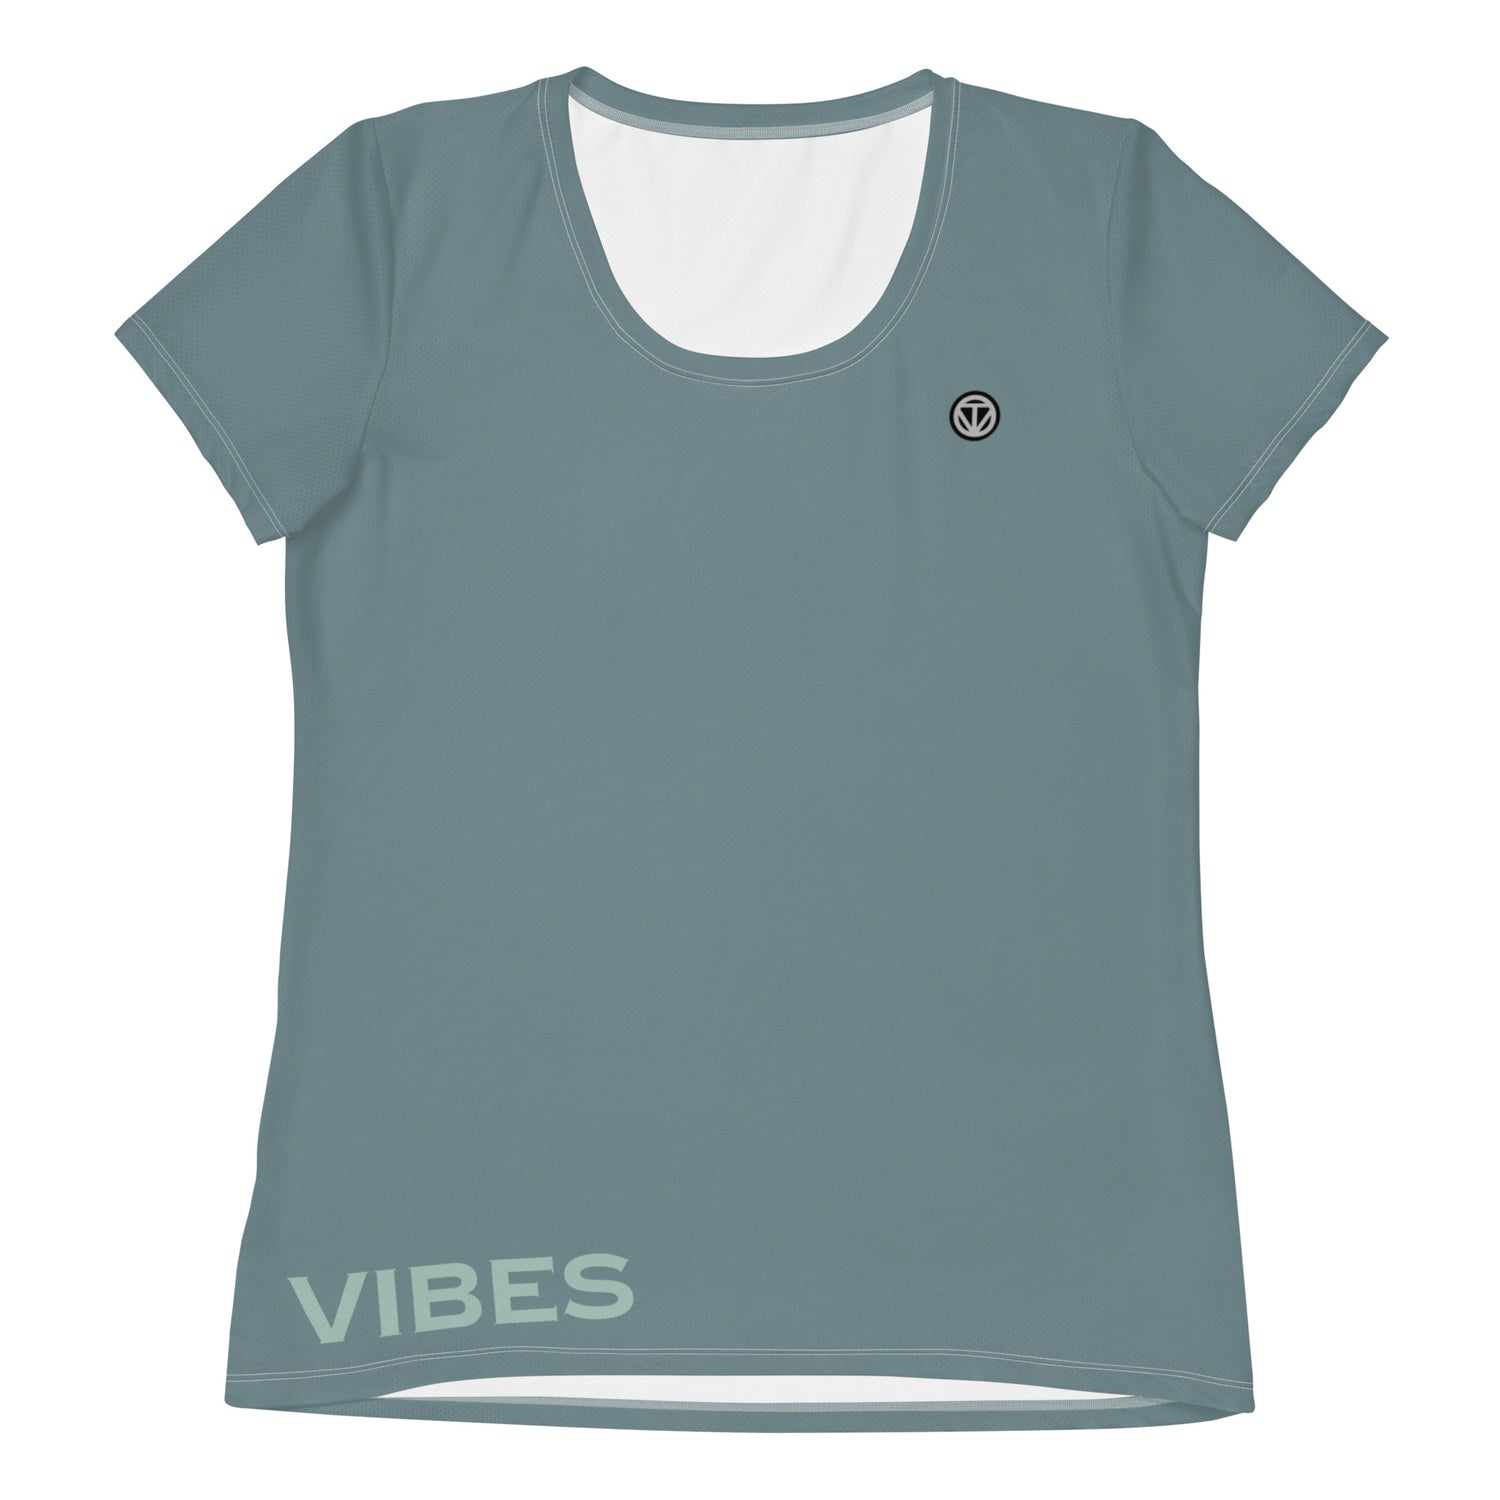 TIME OF VIBES TOV Damen Sport T-Shirt VIBES (Graublau) - €45,00